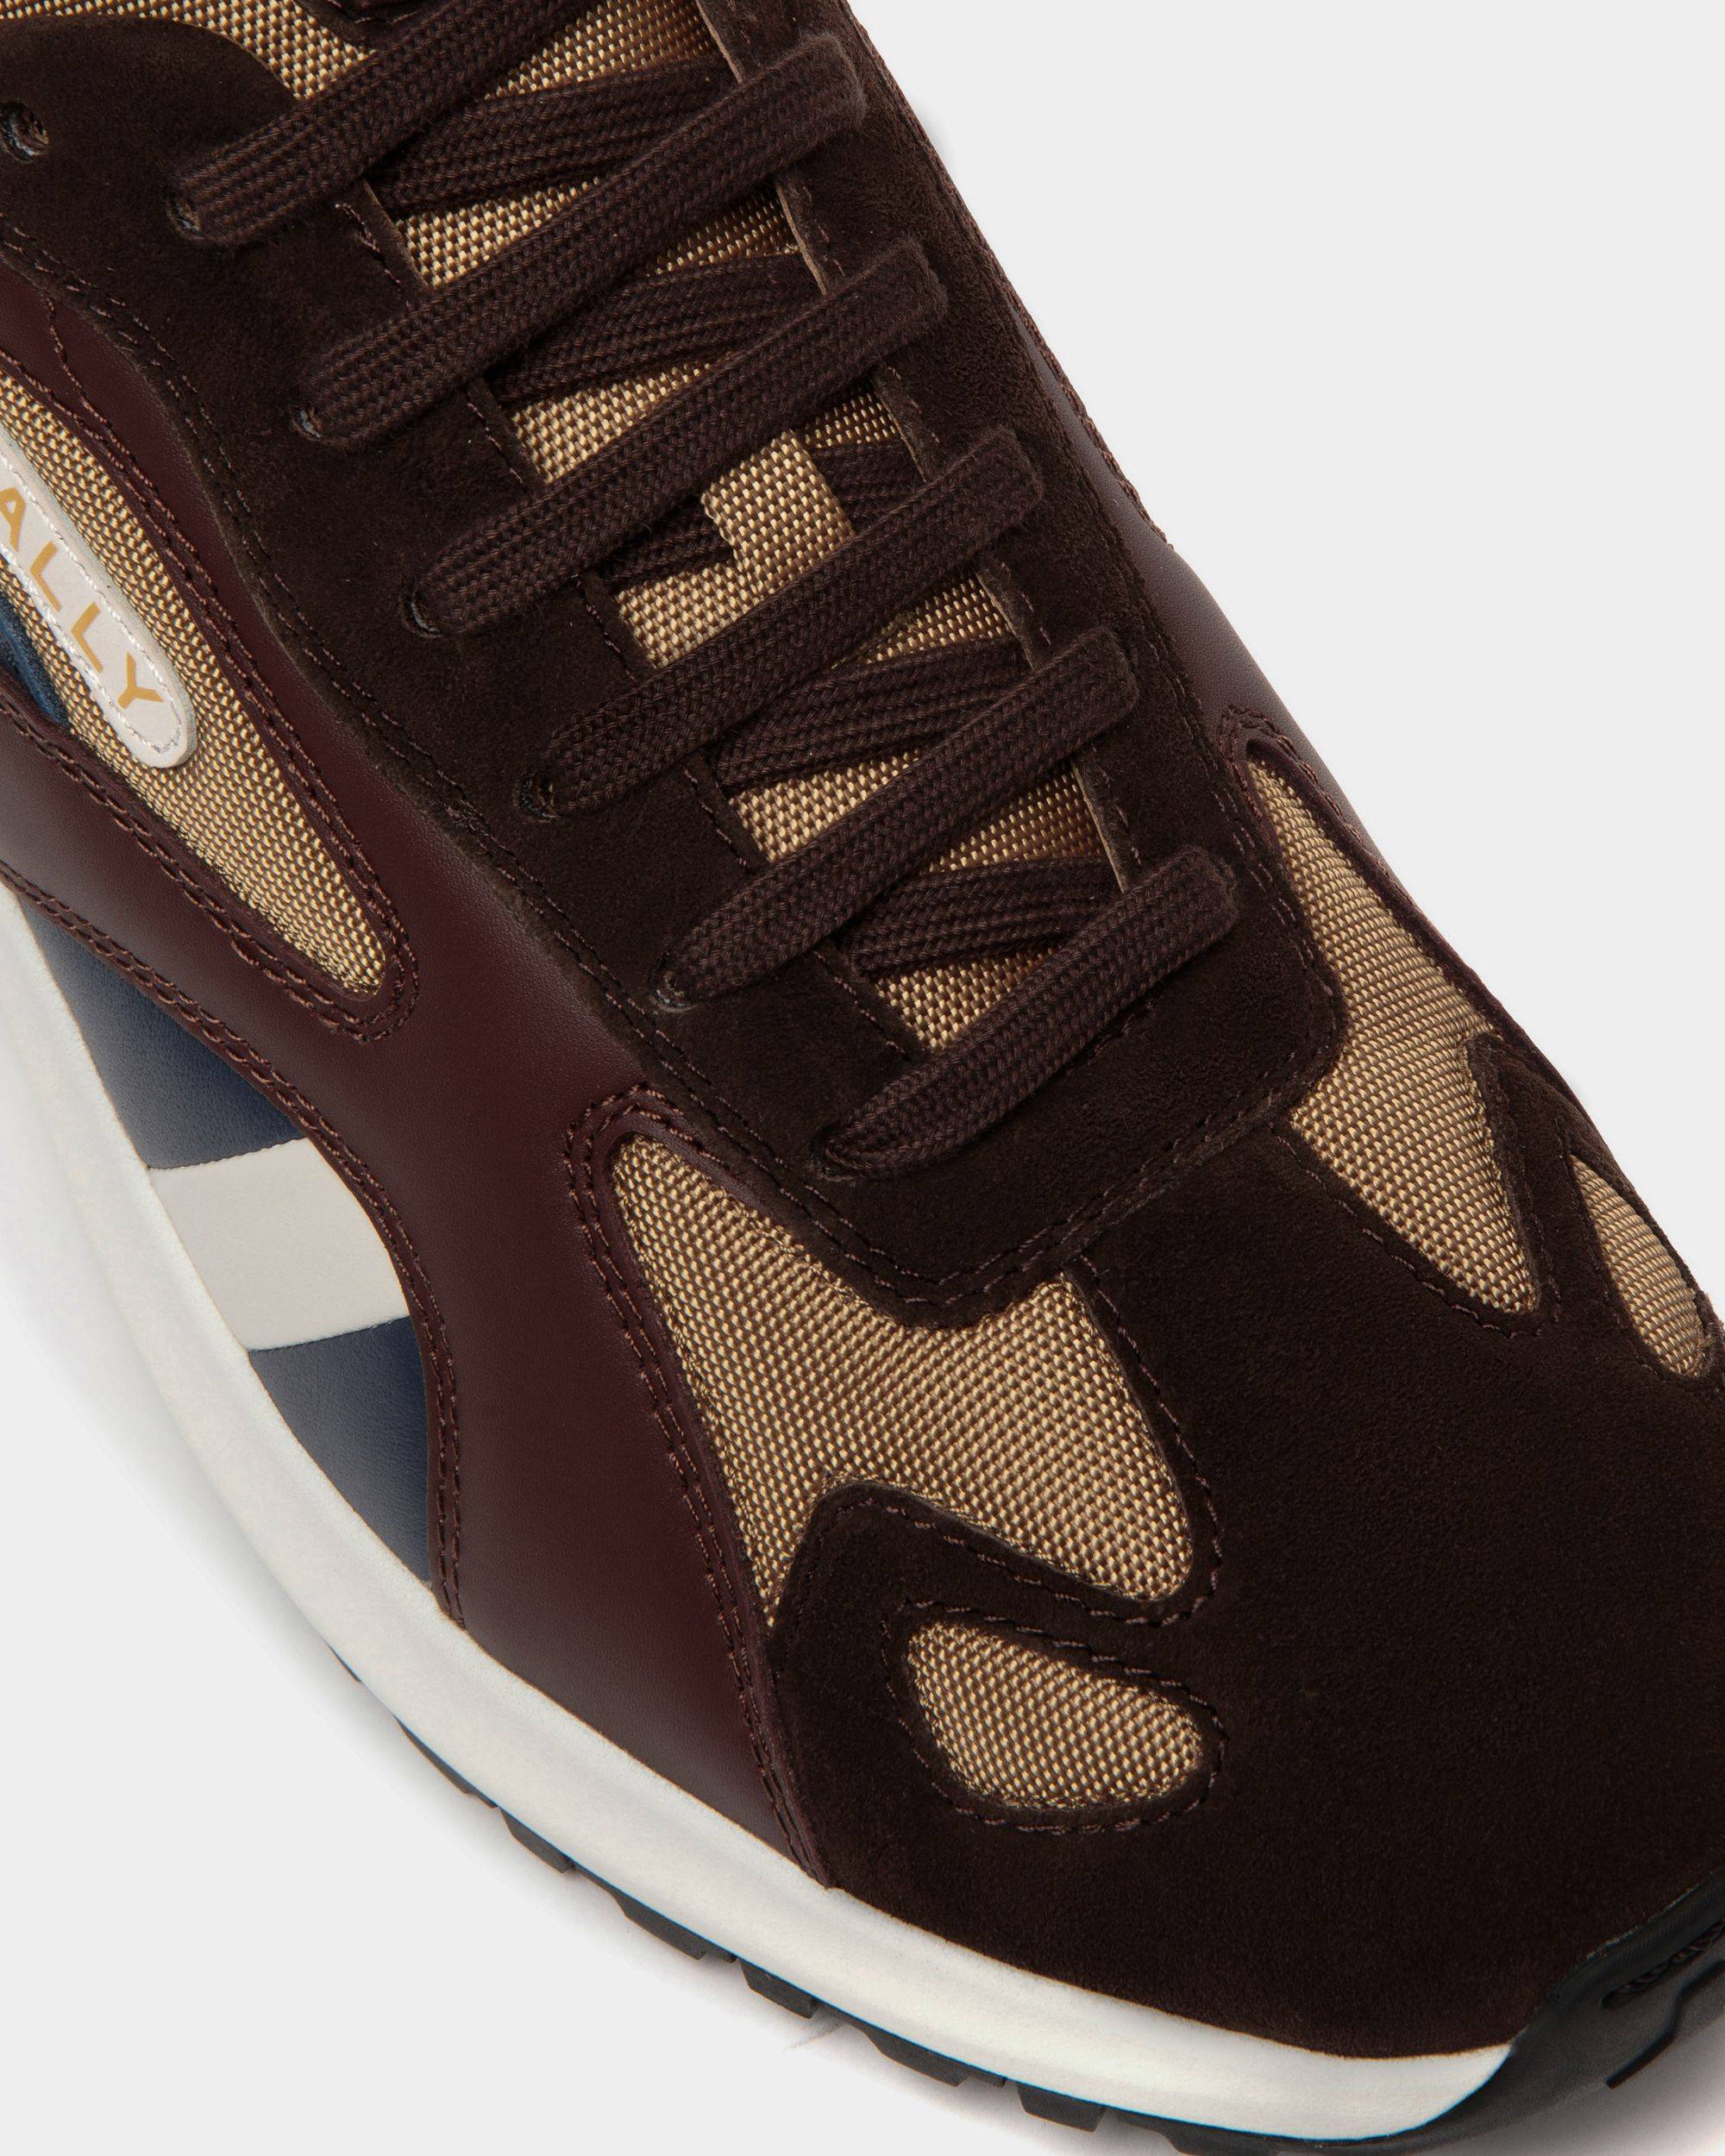 Outline | Men's Sneaker in Multicolor Nylon and Leather | Bally | Still Life Detail